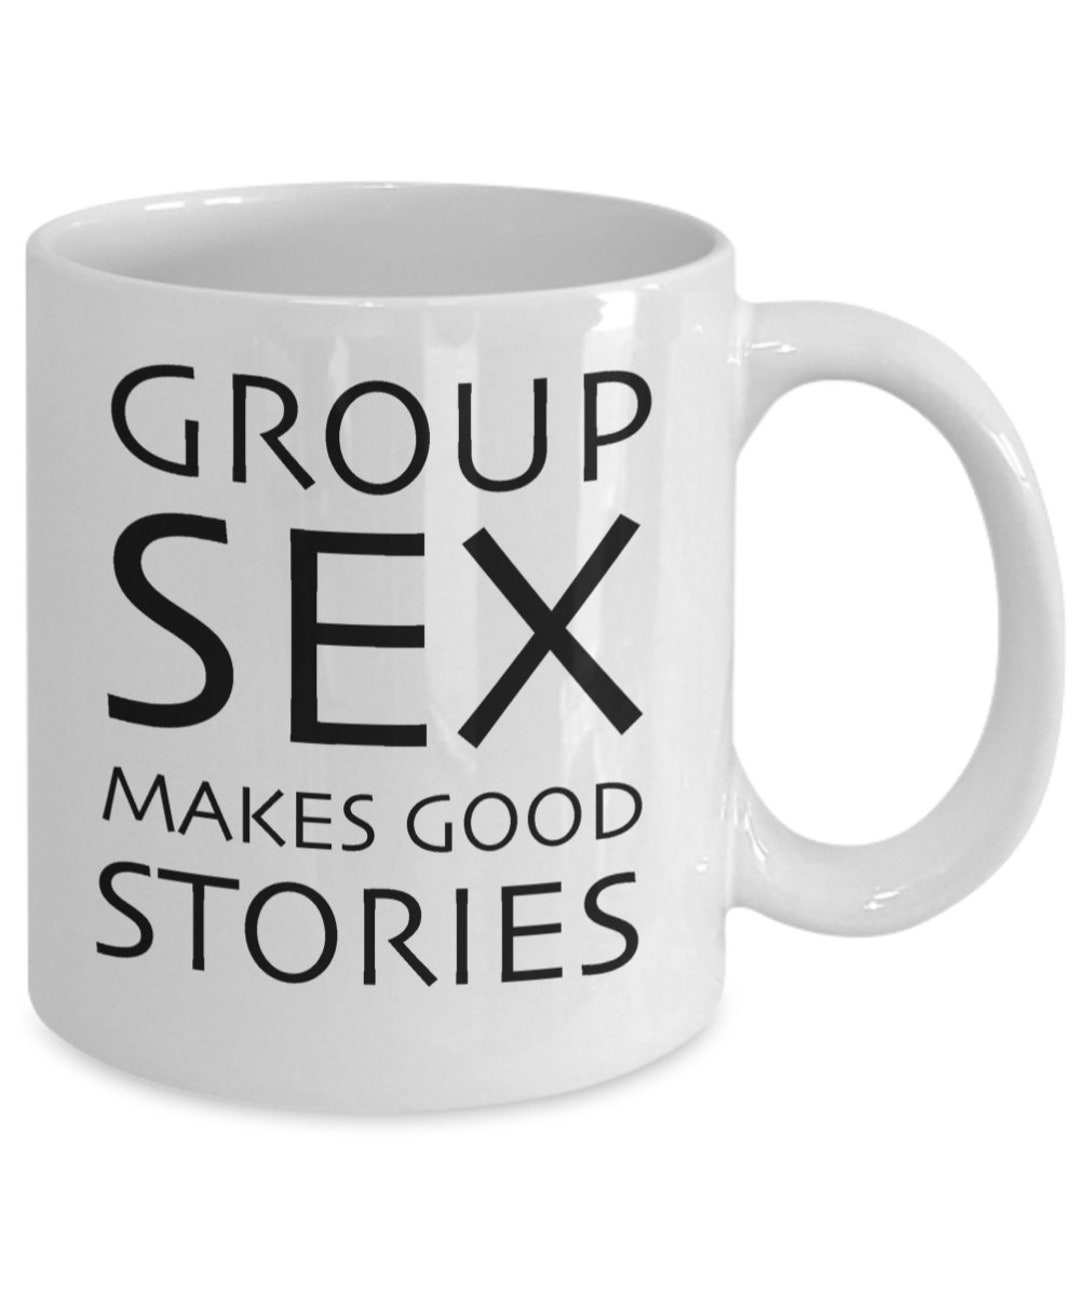 Group Sex Makes Good Stories / Swinger Mug / Funny Sex Gift pic